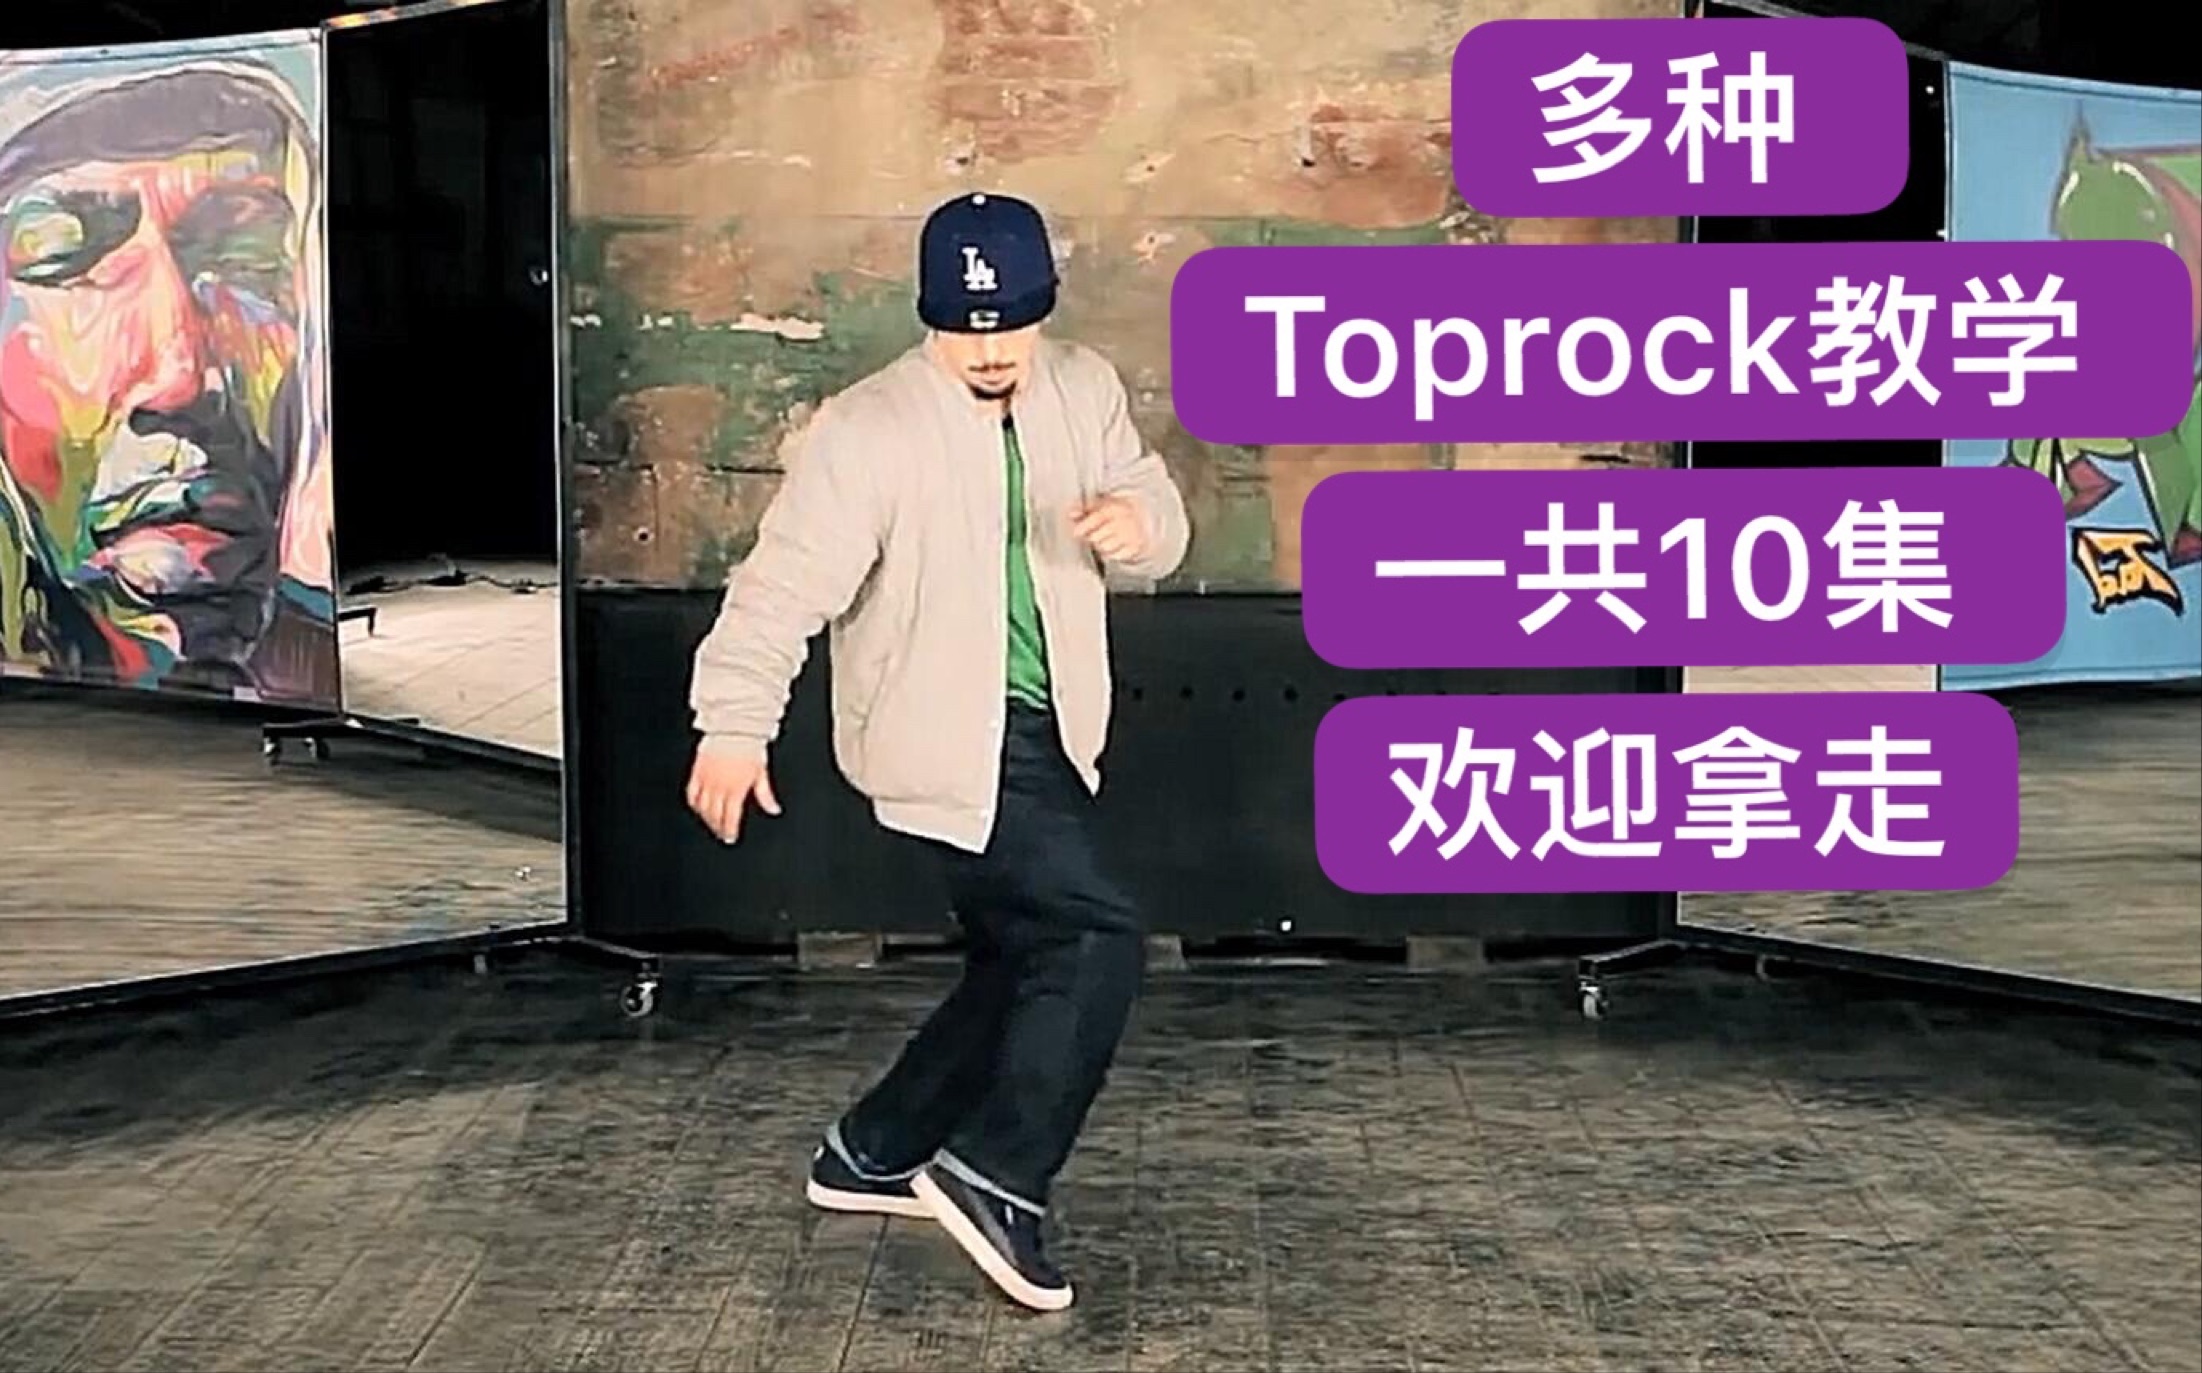 【Toprock教学。一共10集。欢迎拿走】  2019breaking街舞红牛bboybgirl基础新手教学house urban编舞